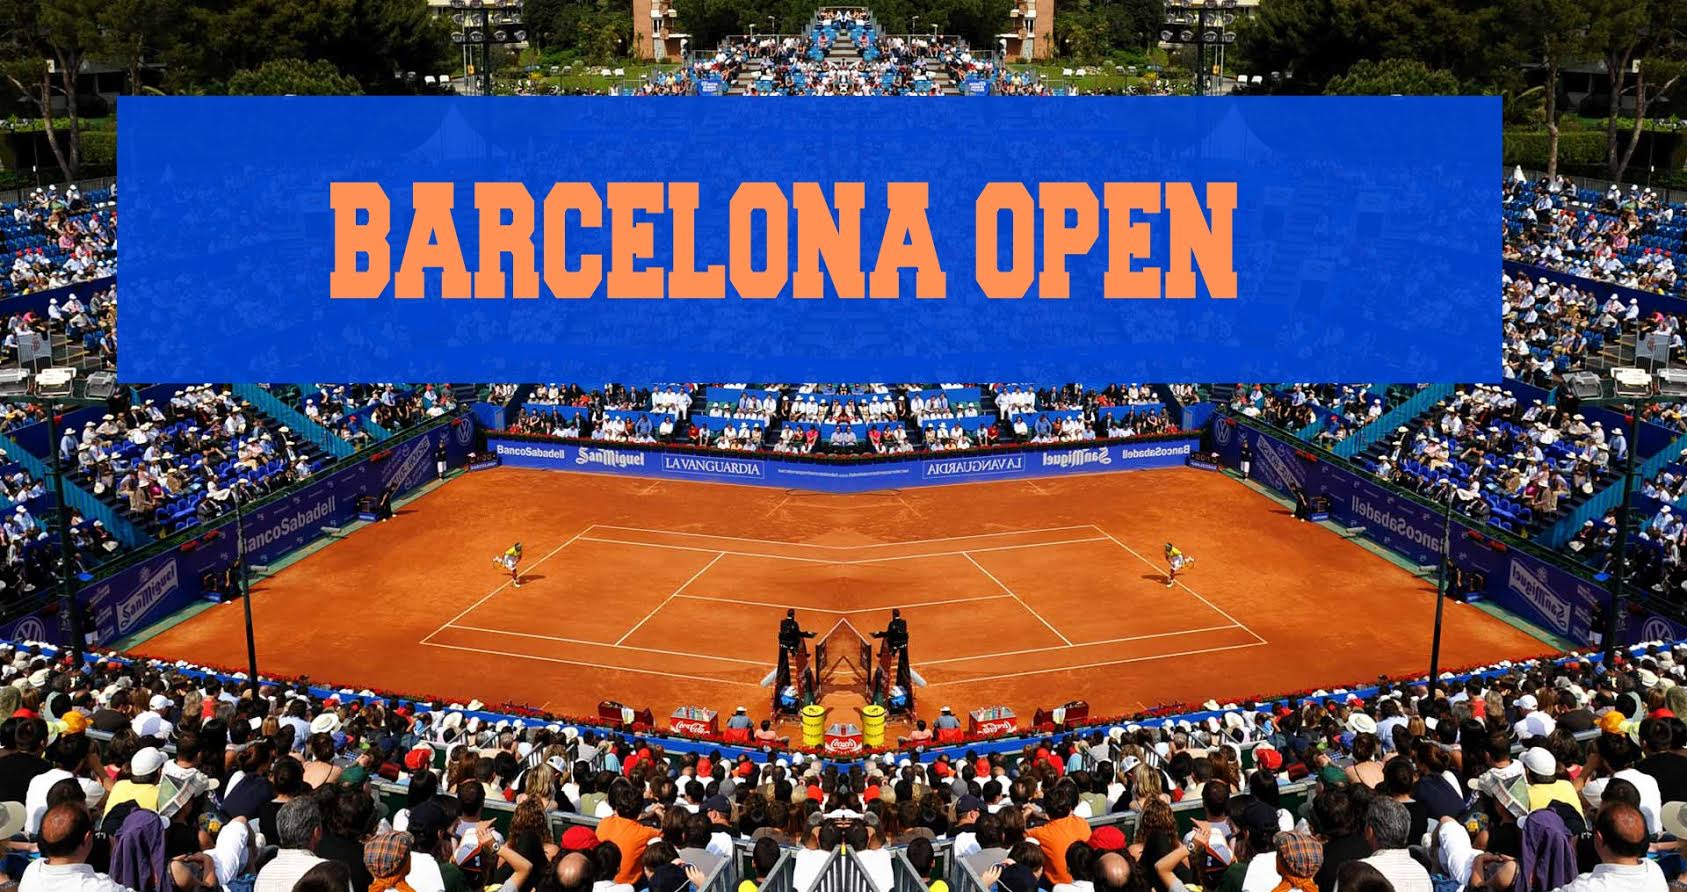 Barcelona Open Banc Sabadell